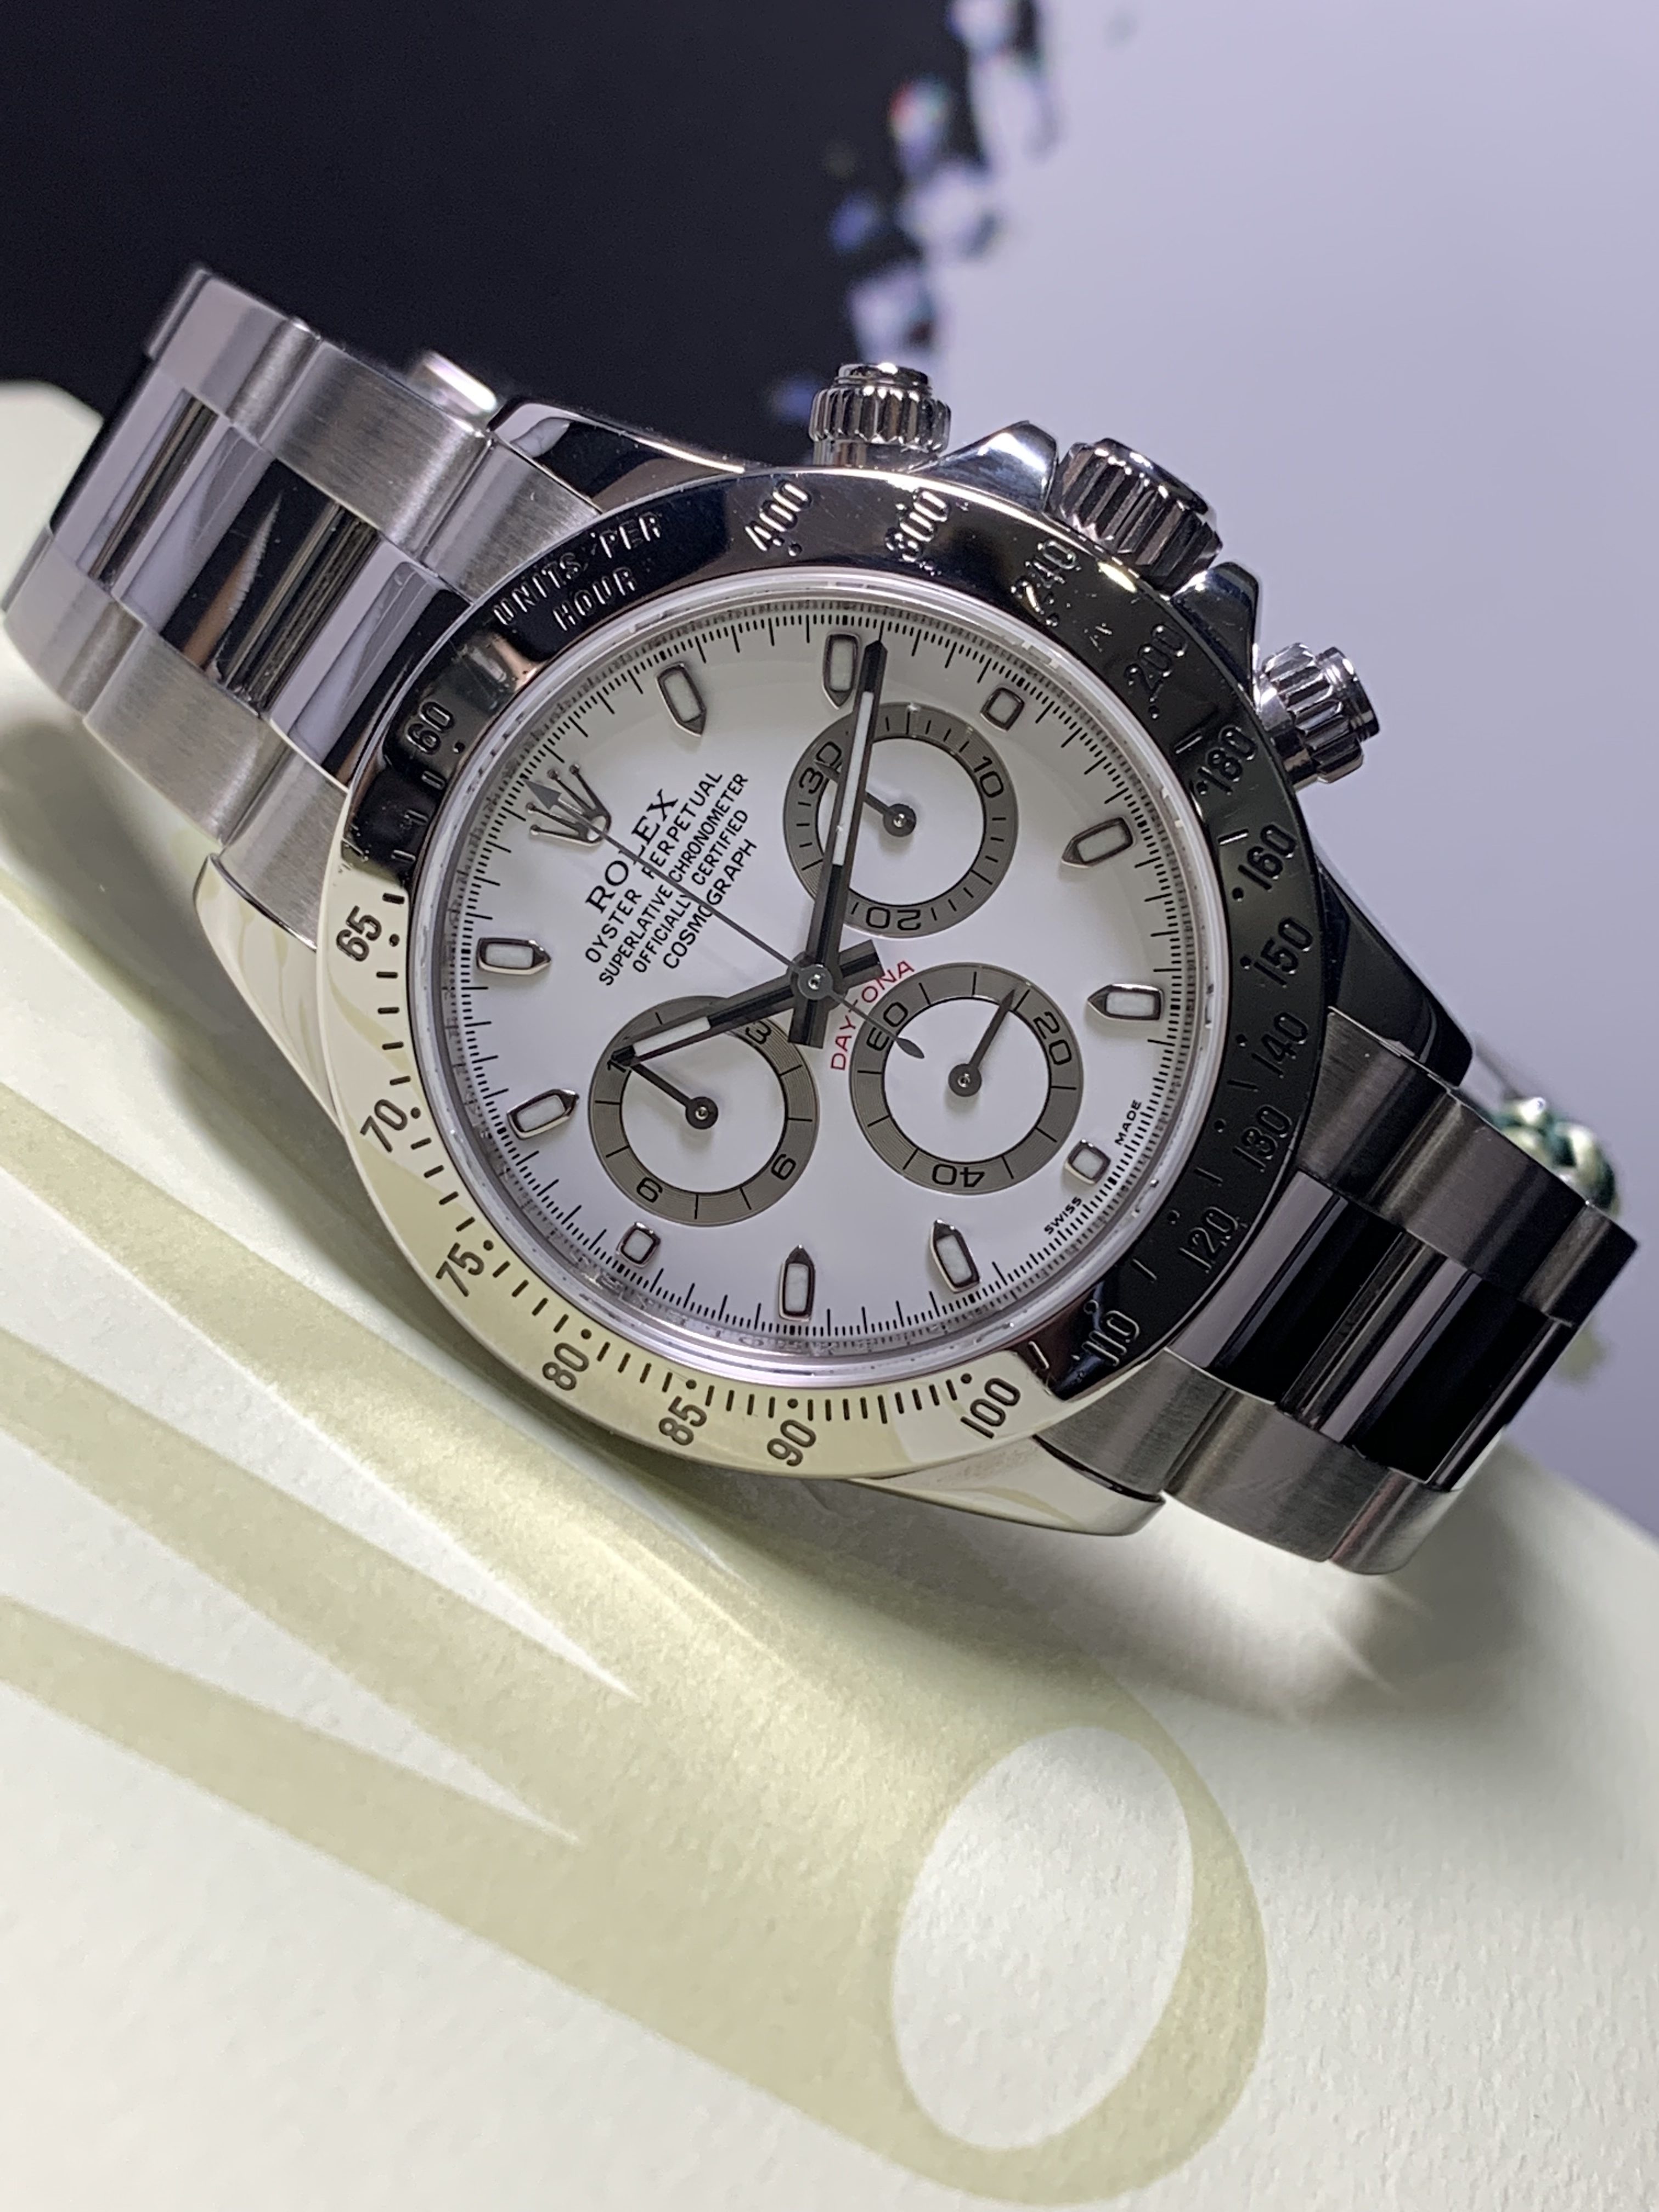 ROLEX DAYTONA 116520 WHITE DIAL STAINLESS STEEL - Carr Watches Rolex Daytona Watch Stainless Steel